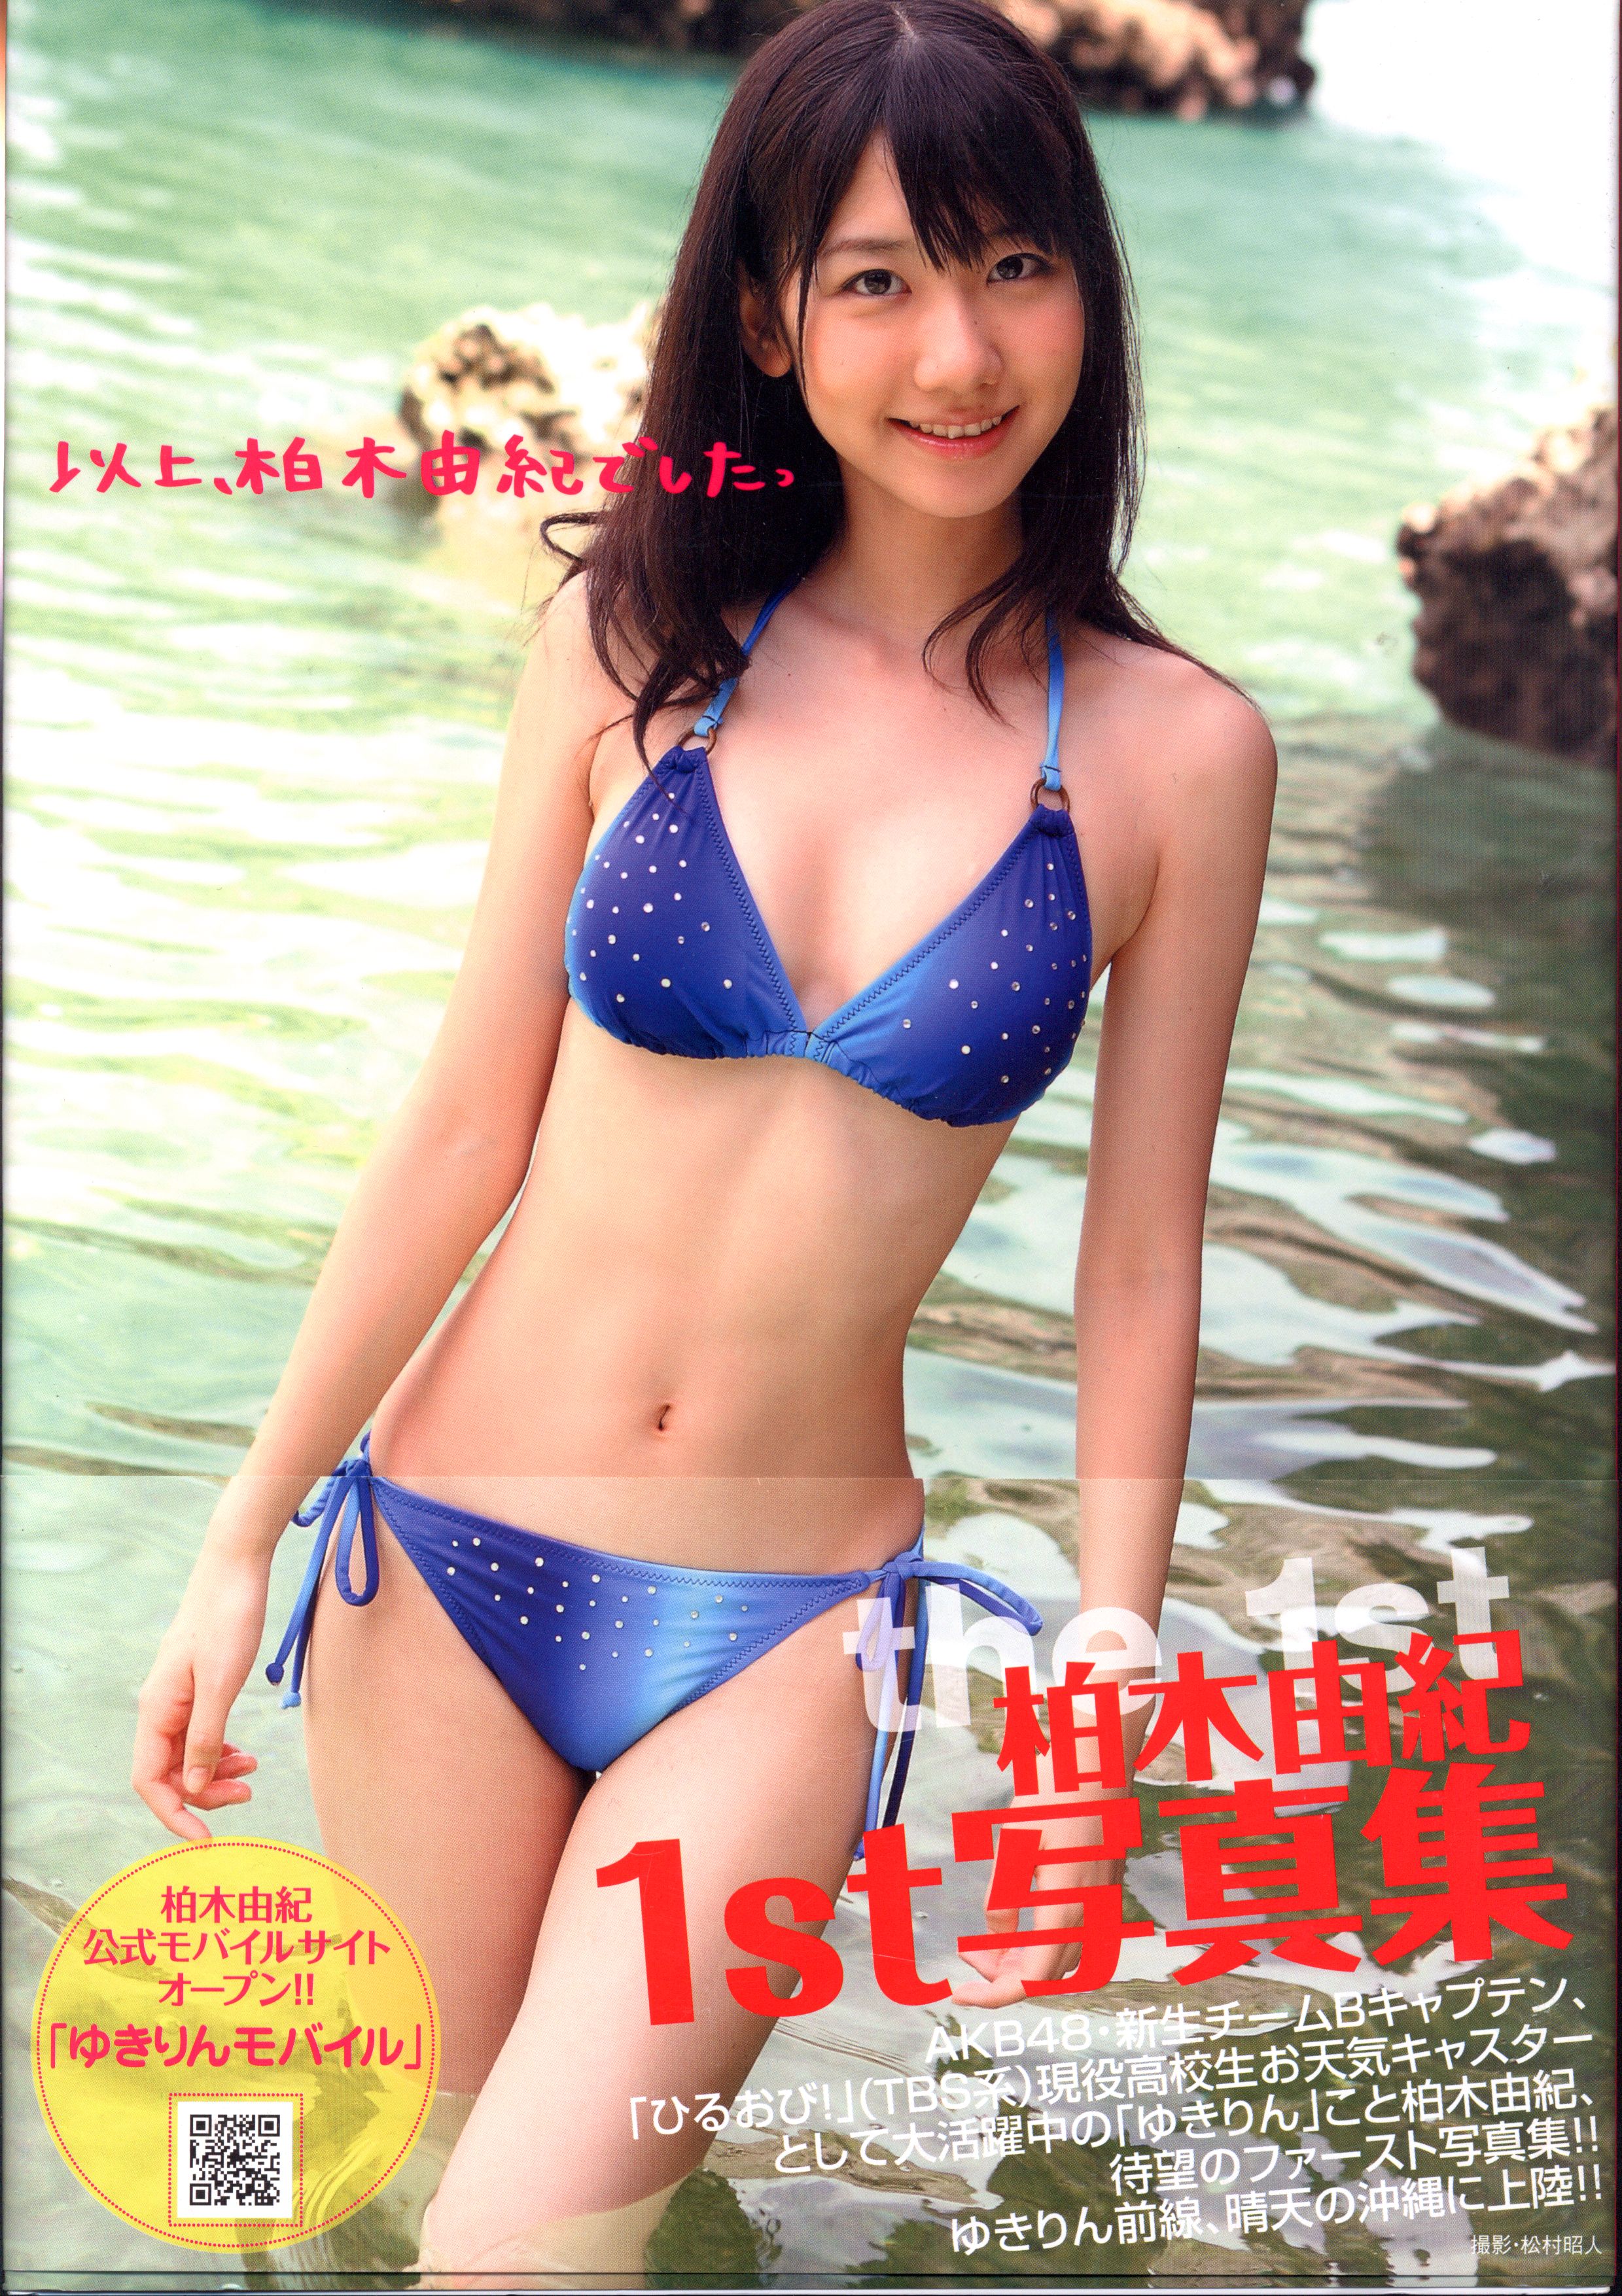 Japanese Junior Idols No Clothes - AKB48 More than Yuki Kashiwagi, was Yuki Kashiwagi | Mandarake Online Shop